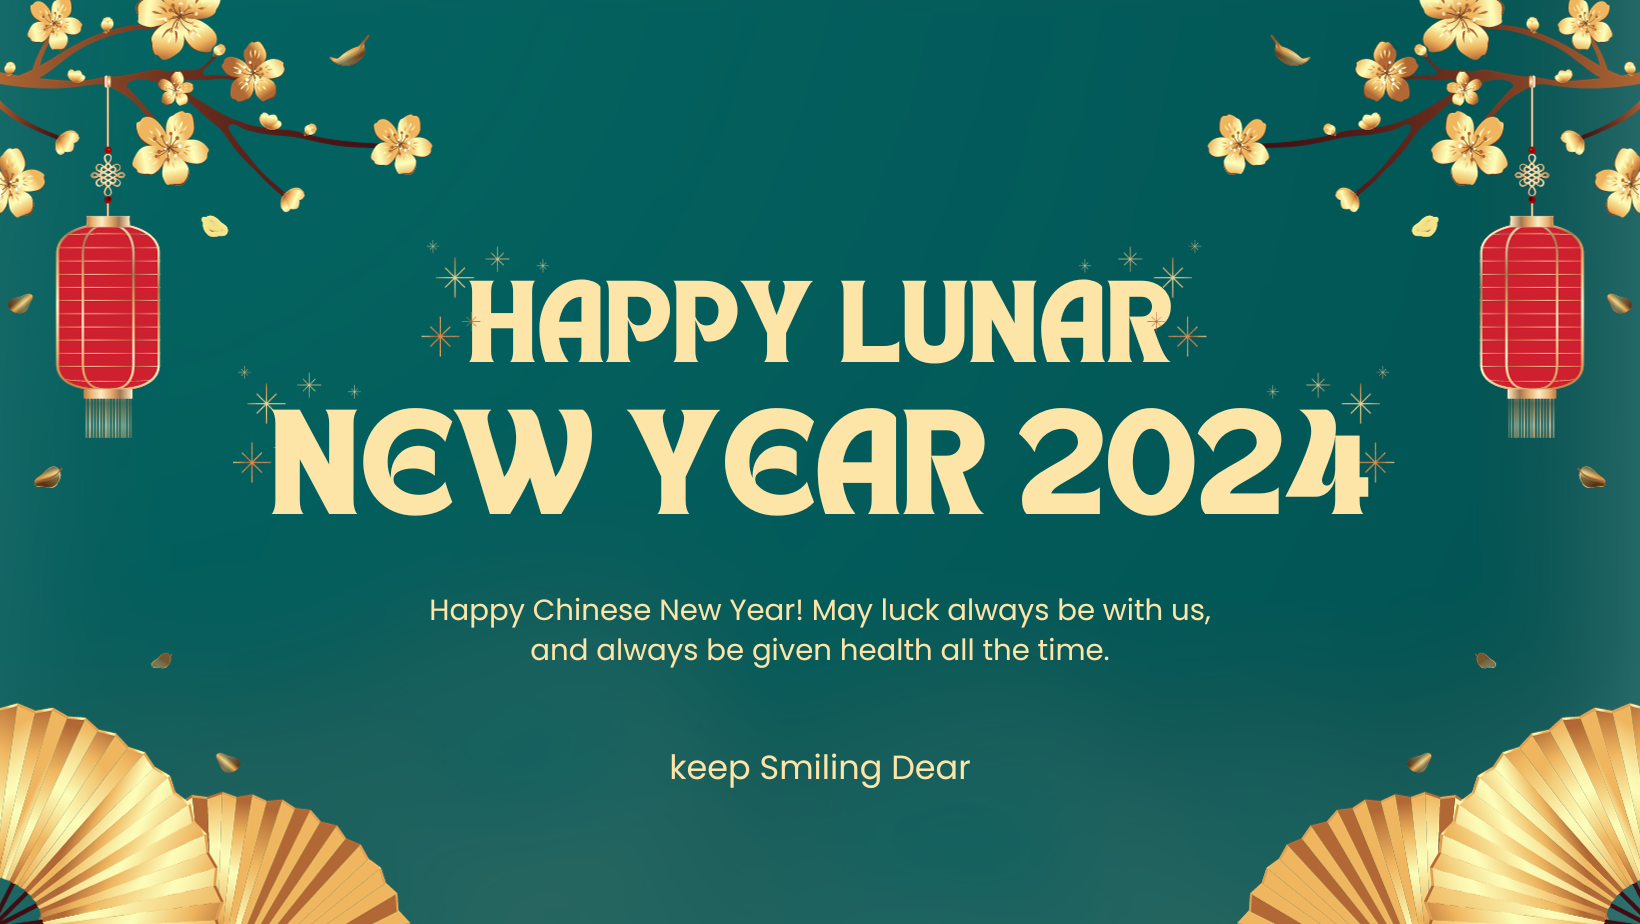 Happy New year 2024 Greetings